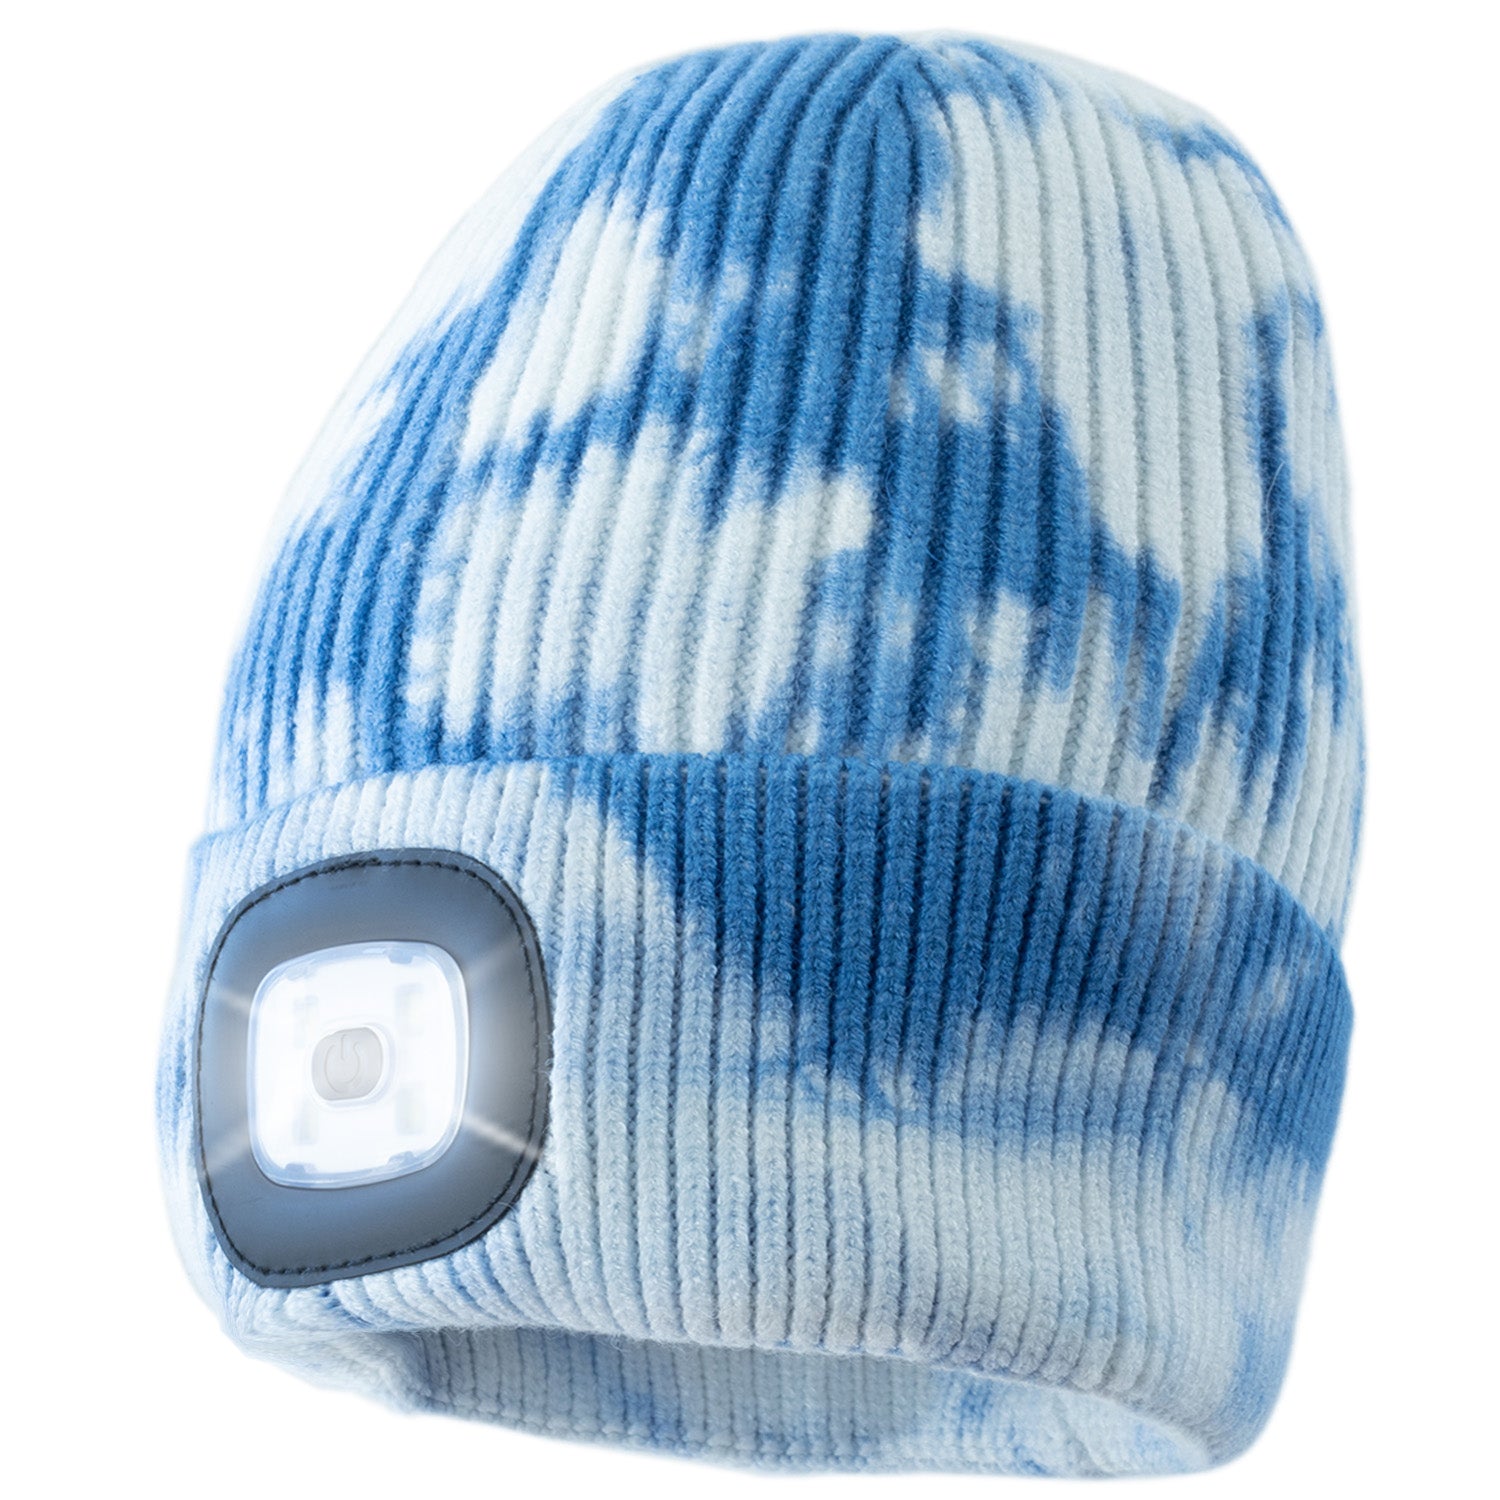 Headlightz® Beanie - Knit - Tie Dye Blue – Roq Innovation